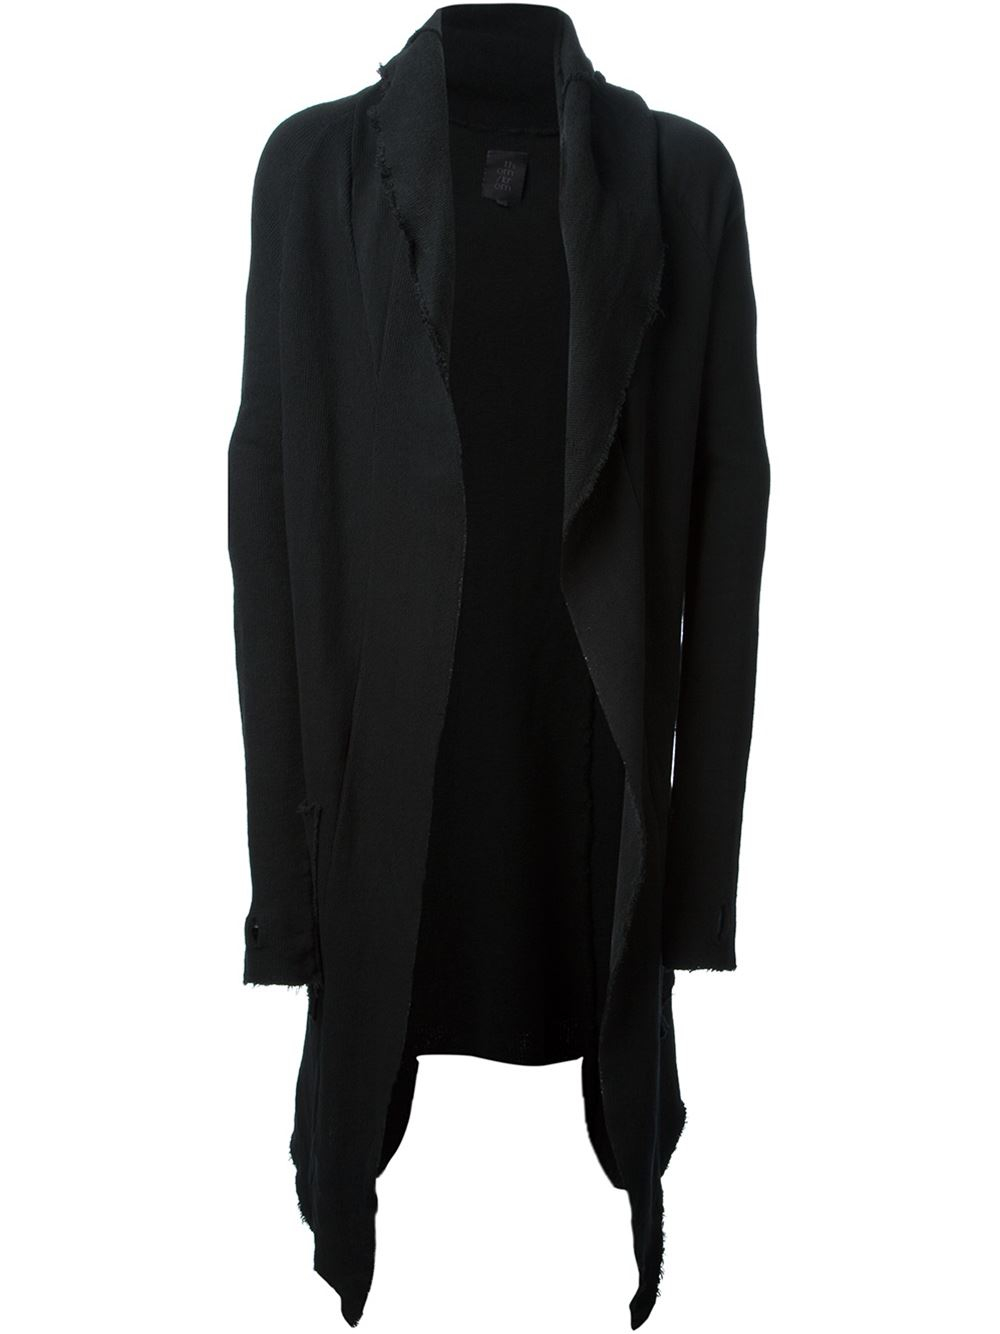 Lyst - Thom Krom Long Asymmetric Cardigan in Black for Men